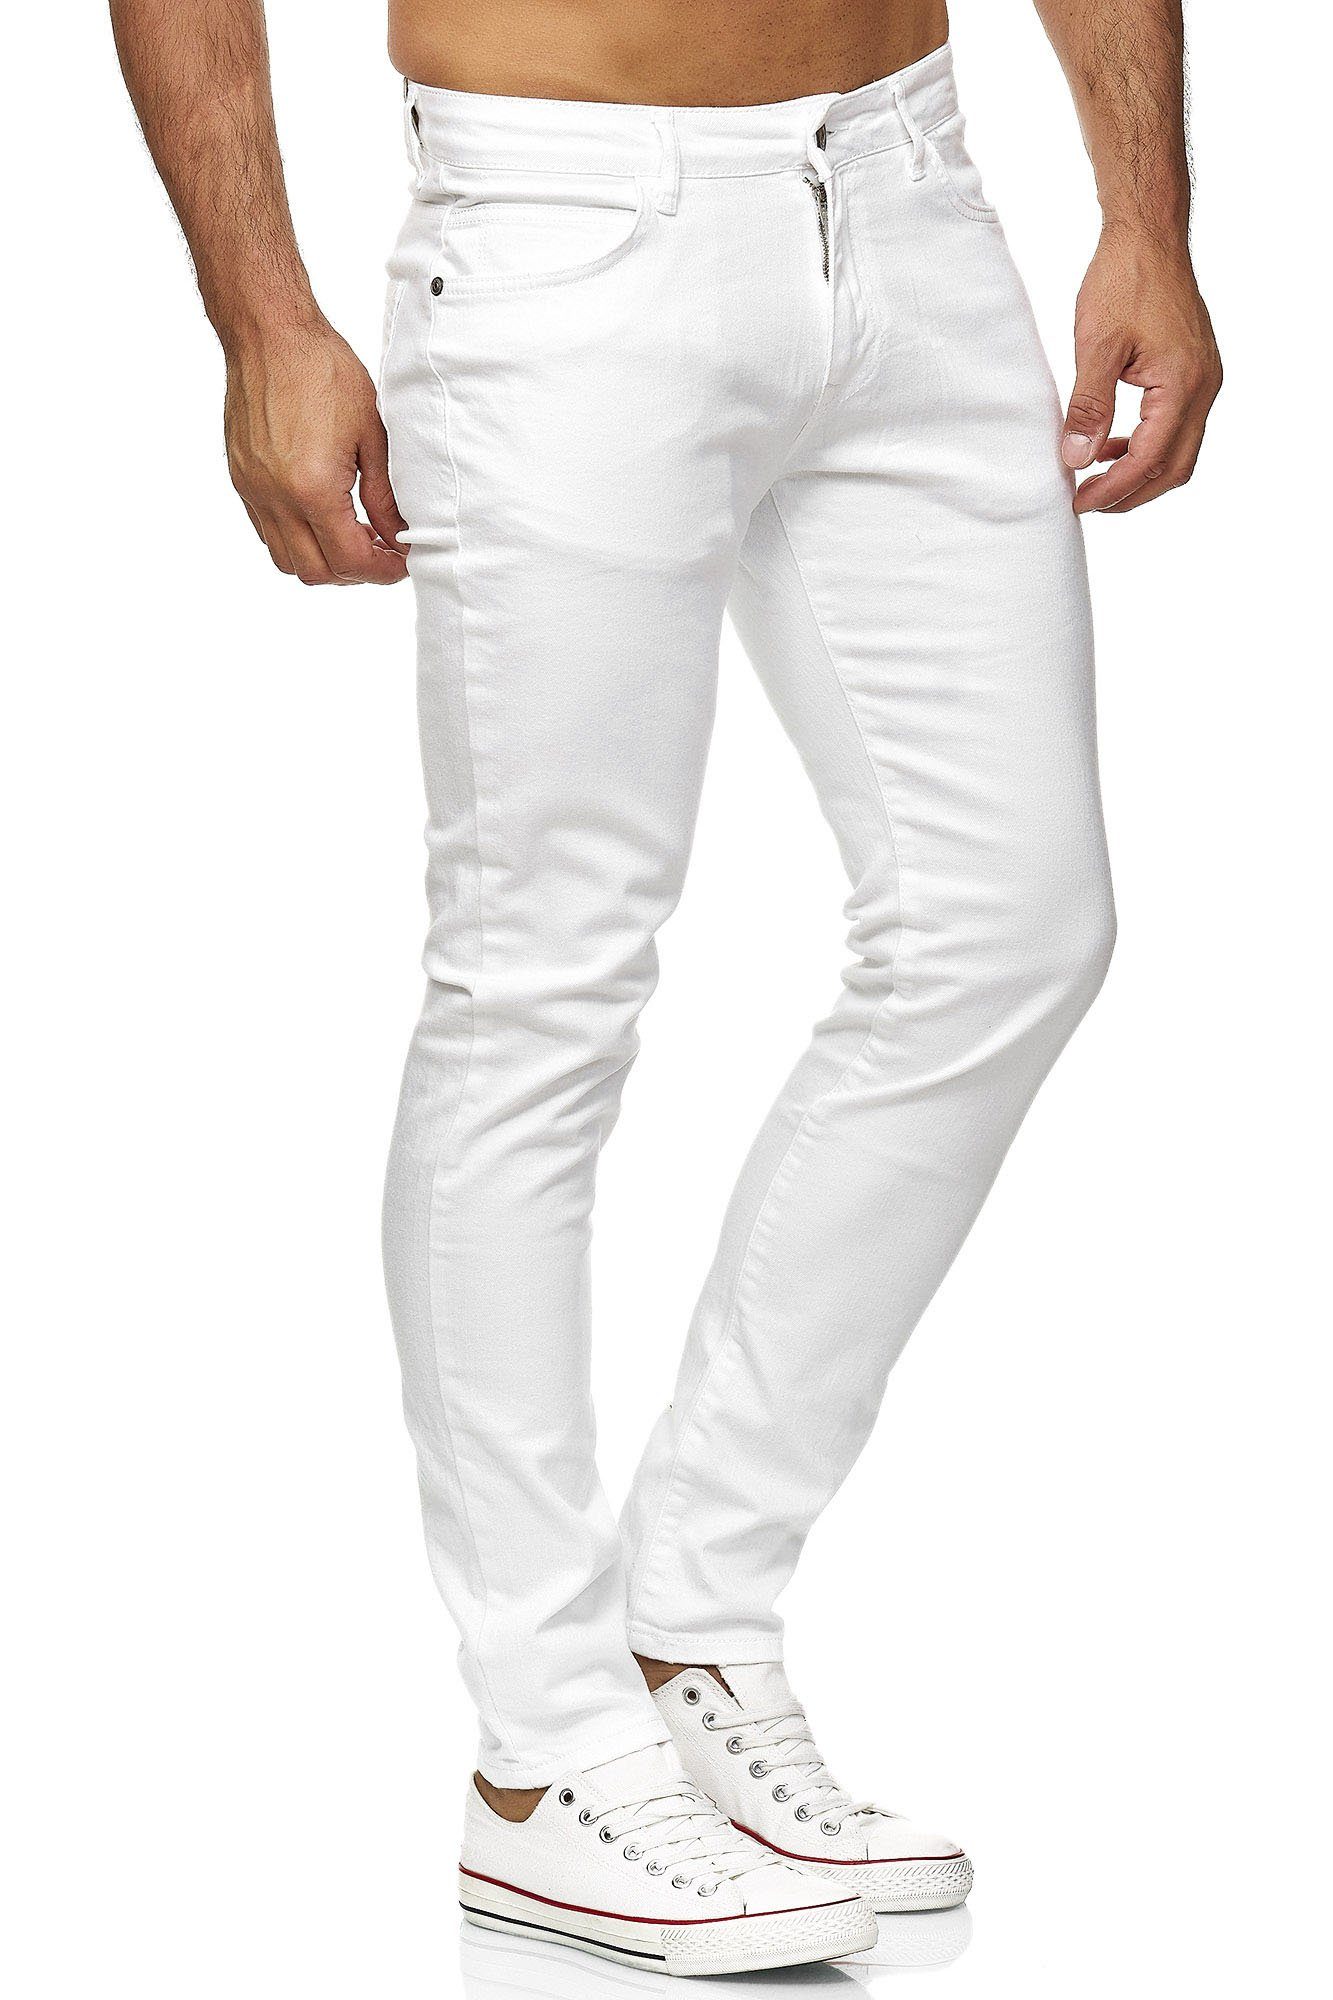 Chinohose Stretchkomfort Hose Premium Slim-Fit RedBridge Weiß